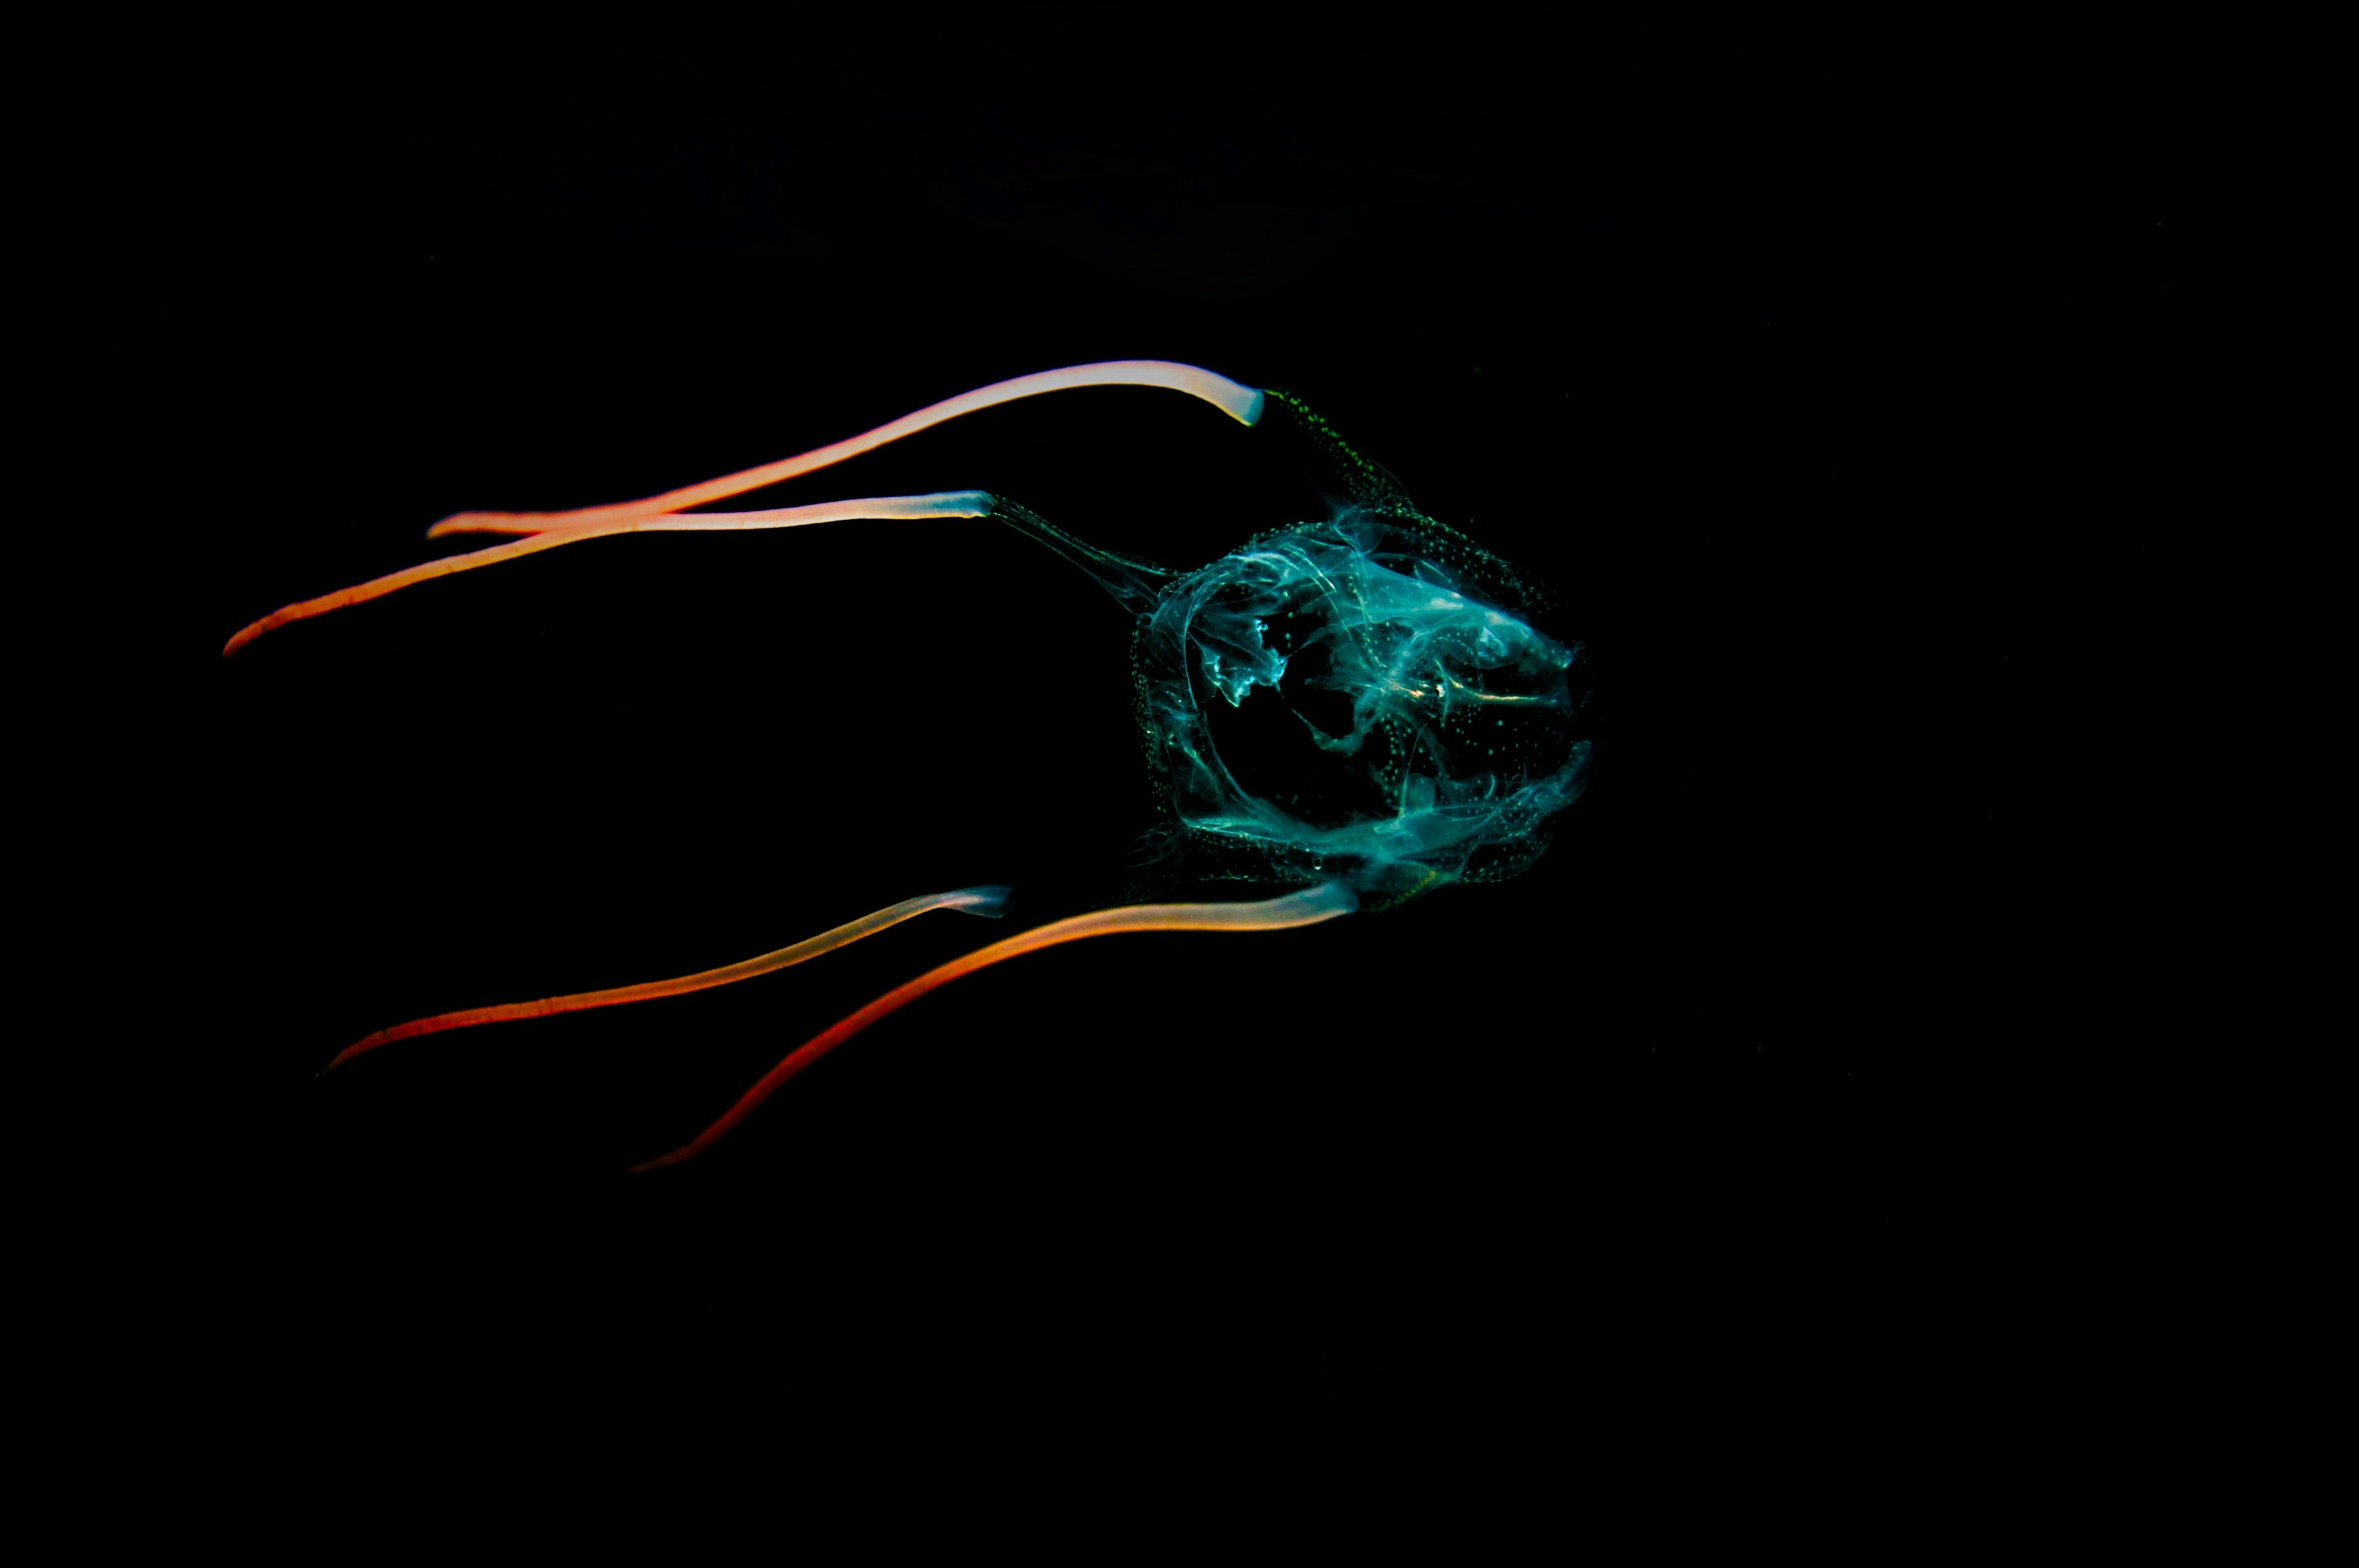 jellyfish on a dark place